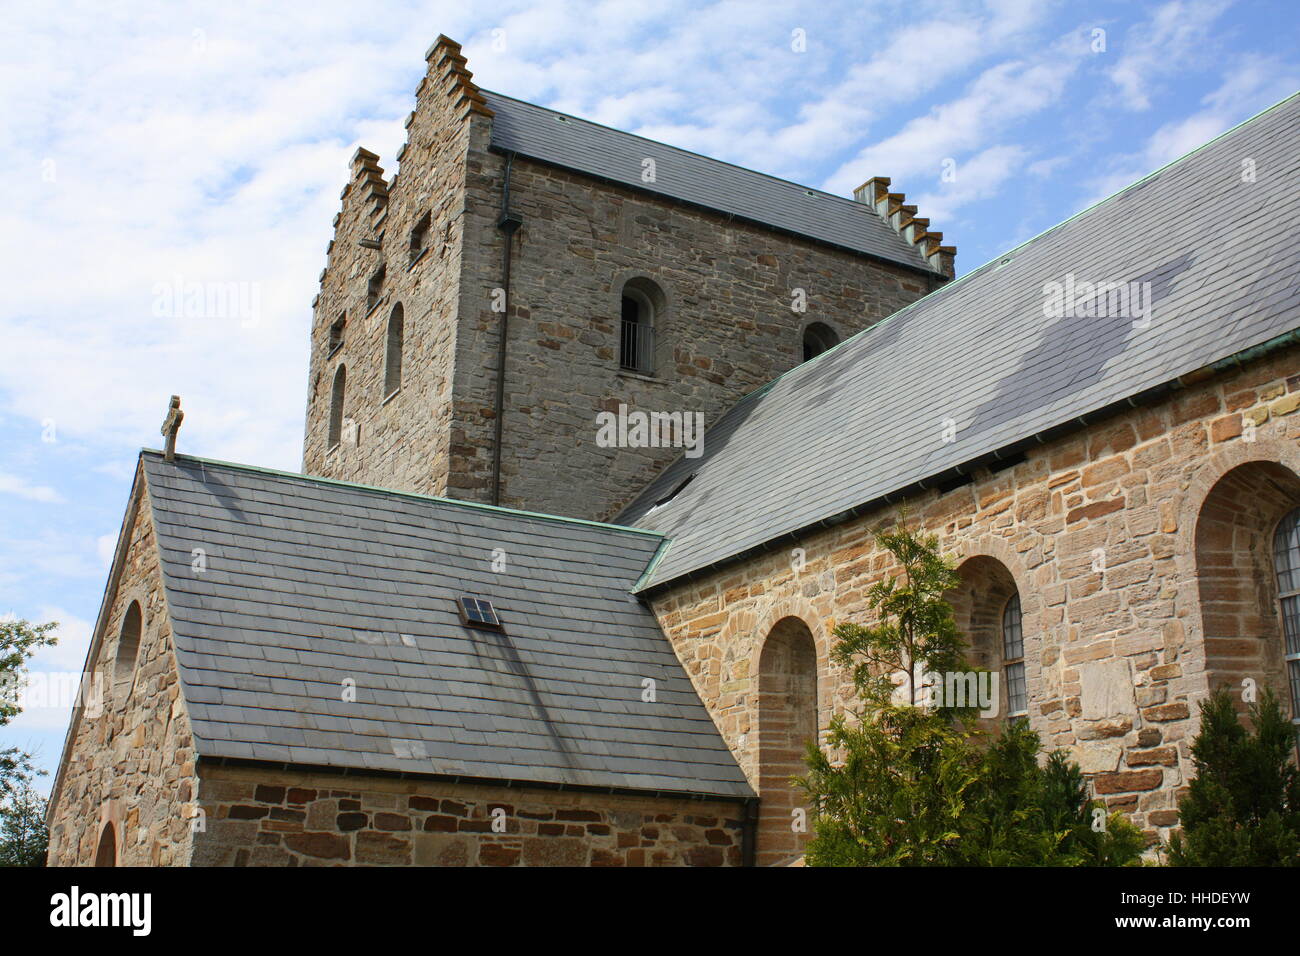 Aa Church (Aakirkeby) from 1150 on the island Bornholm. Denmark Stock Photo